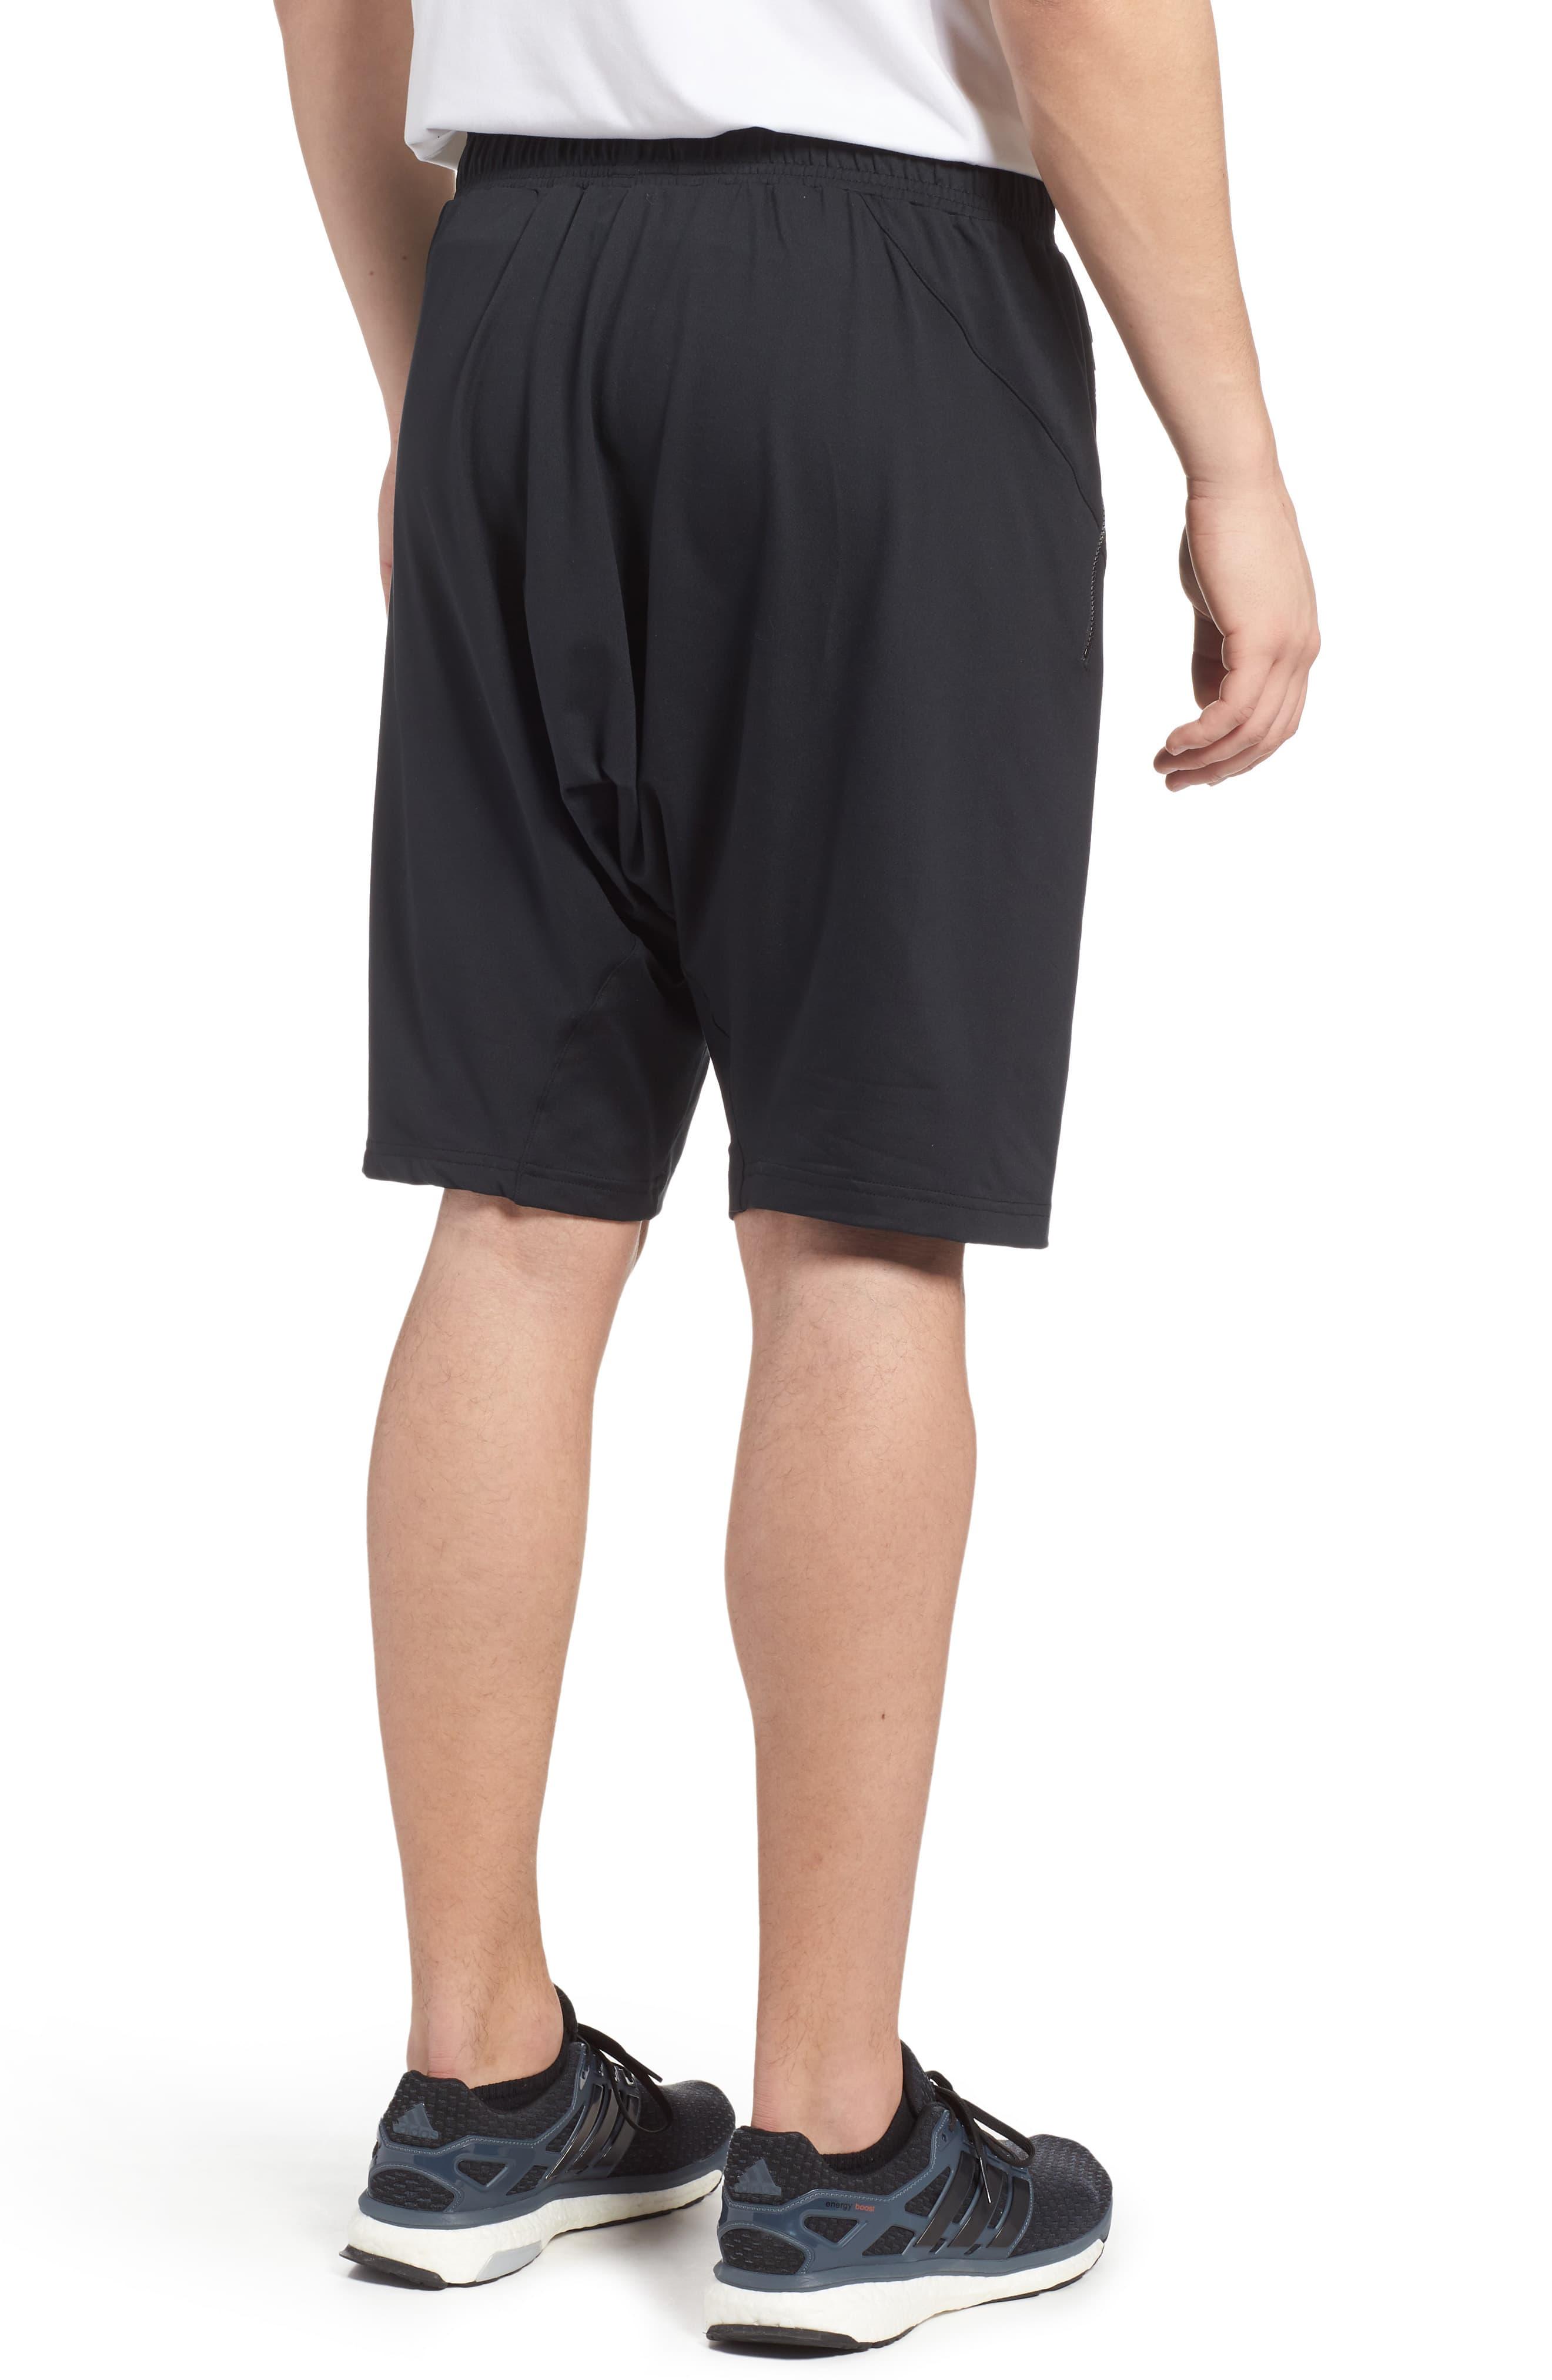 Alo Yoga Drop Crotch Shorts in Black for Men - Lyst